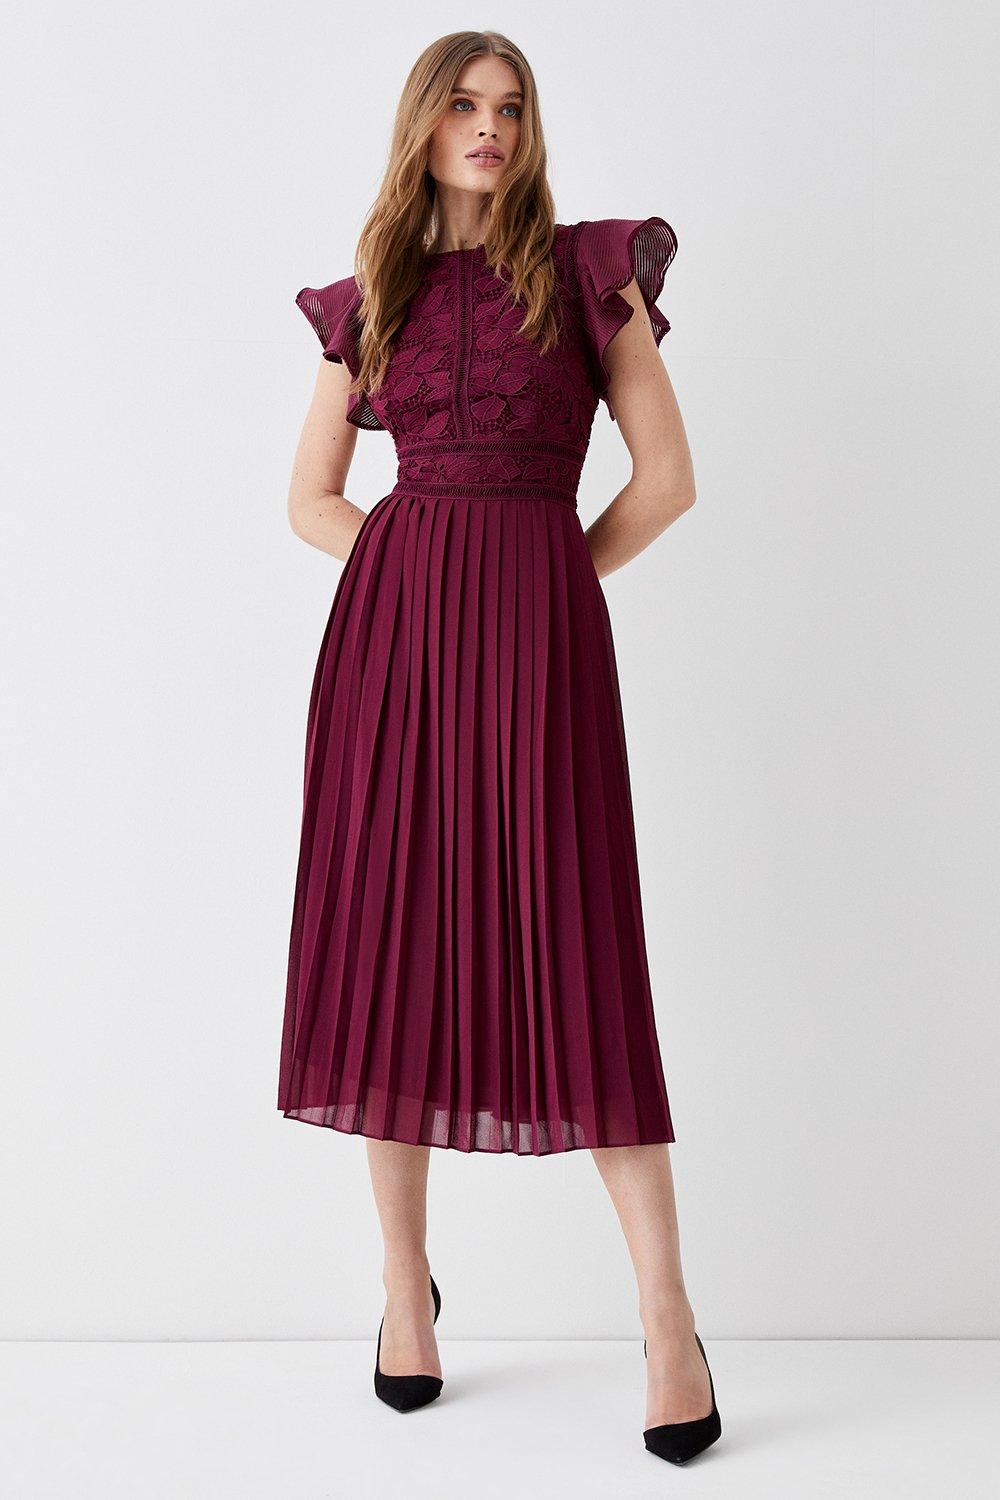 Dresses | Organza And Trim Insert Lace Top Pleat Dress | Coast